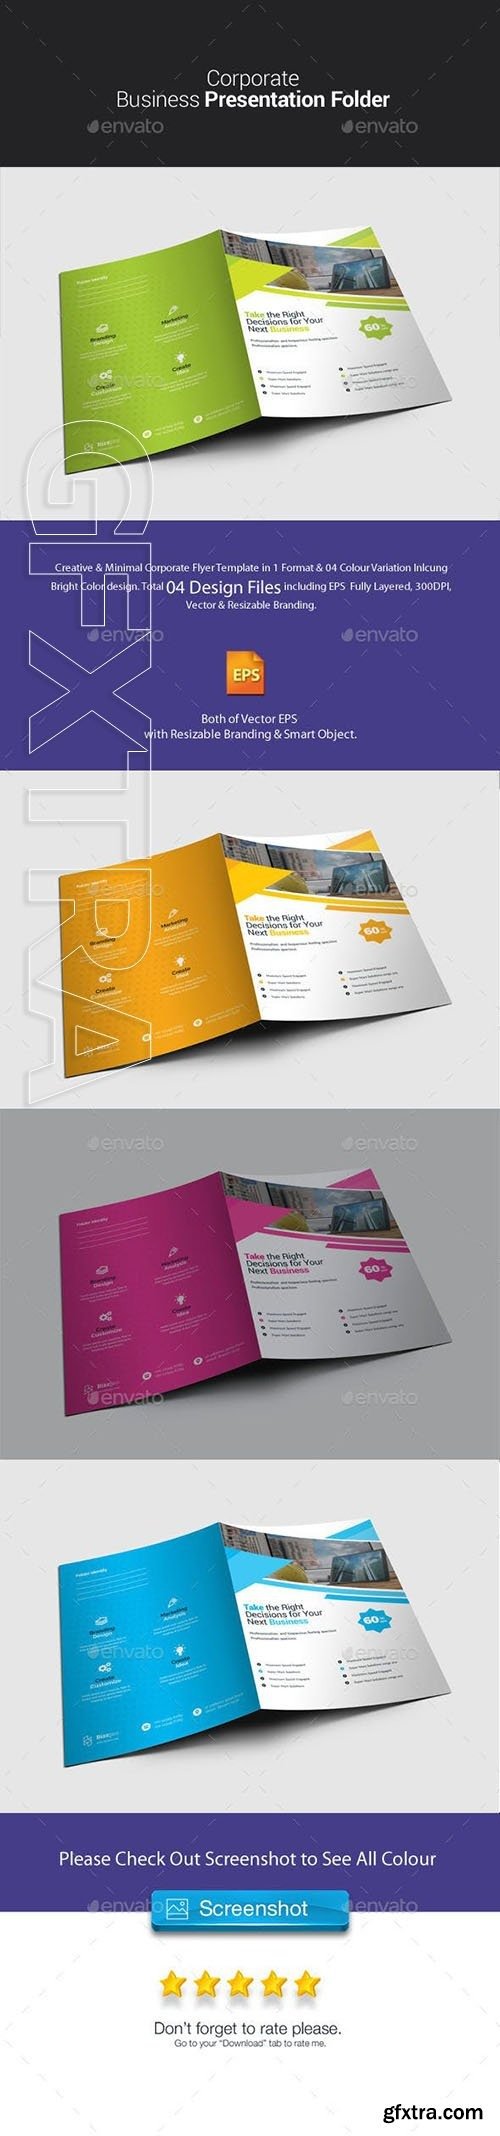 GraphicRiver - Corporate Presentation Folder 23077538